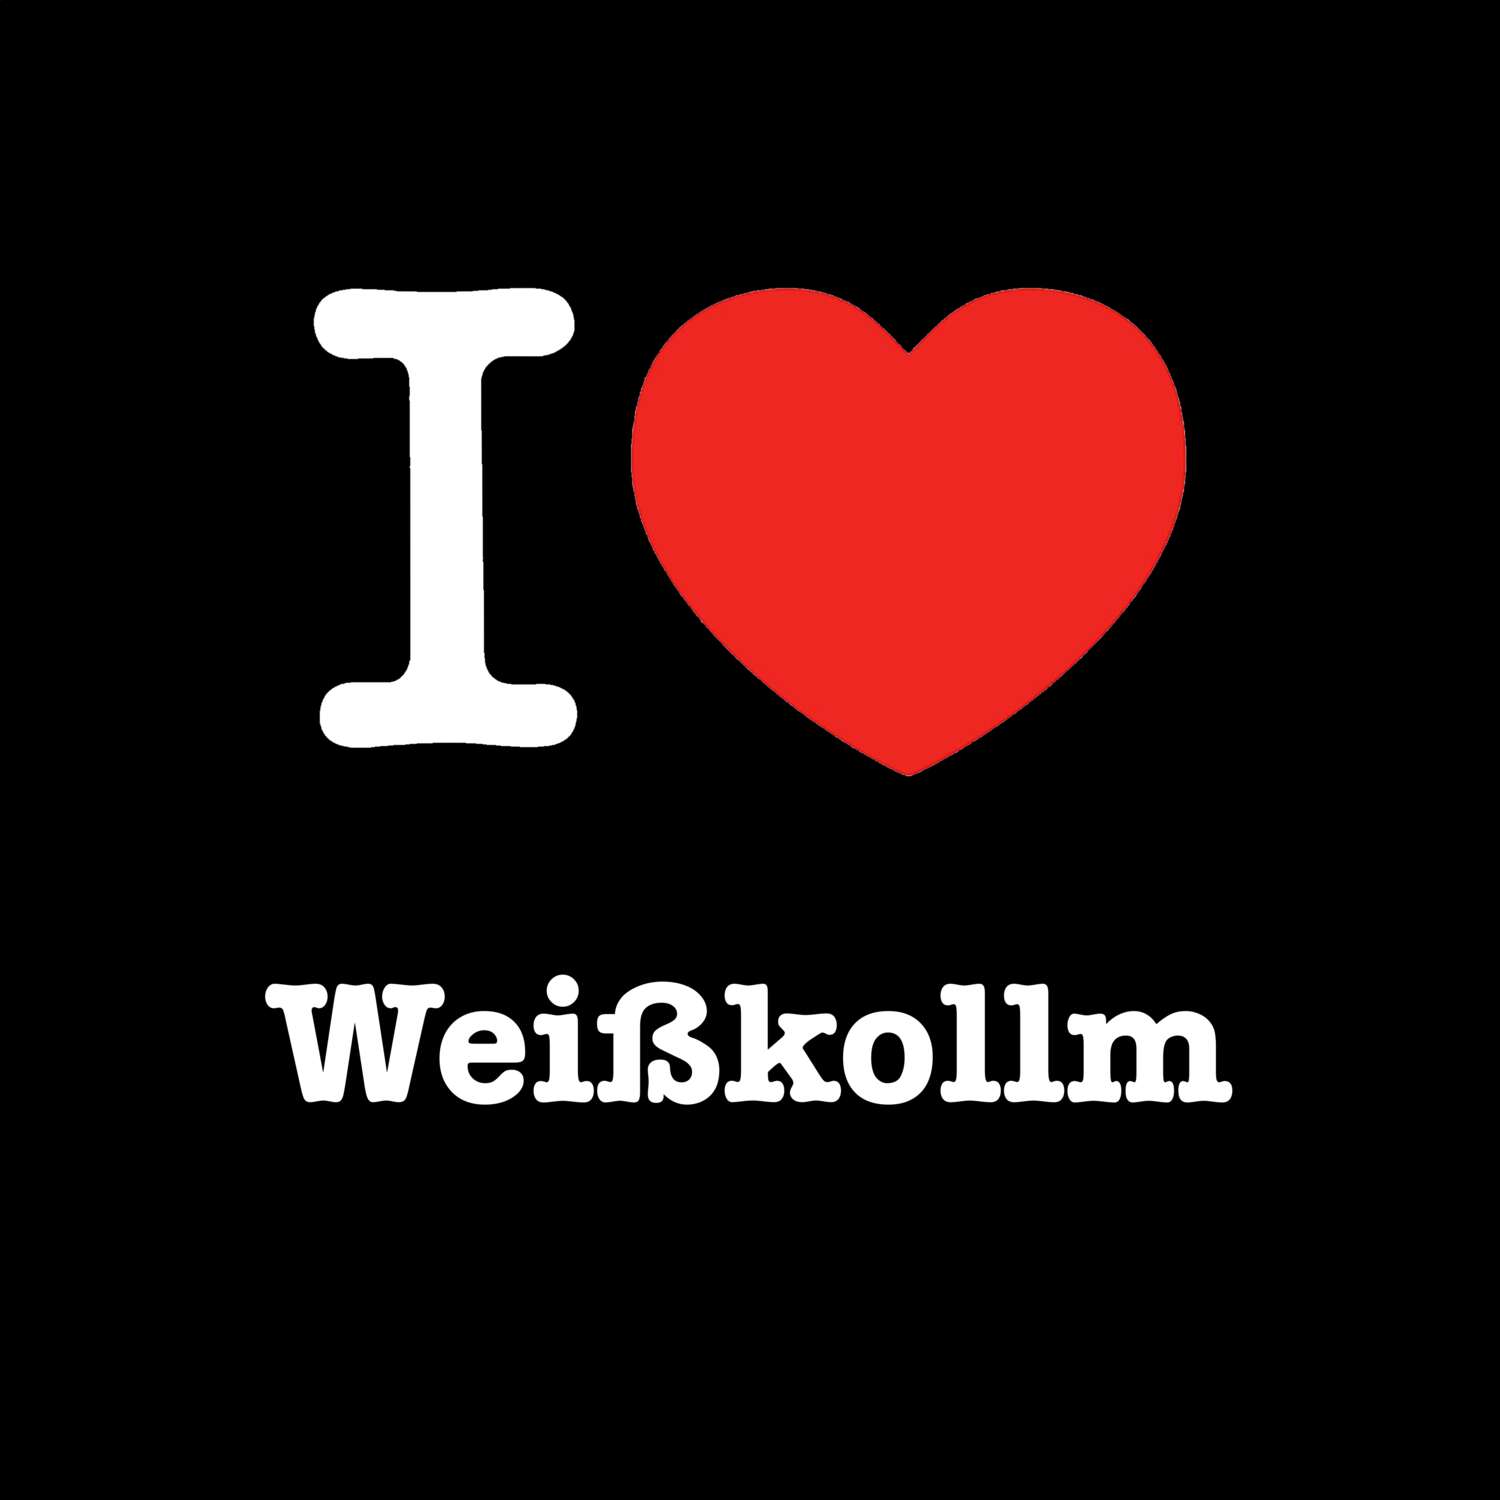 Weißkollm T-Shirt »I love«